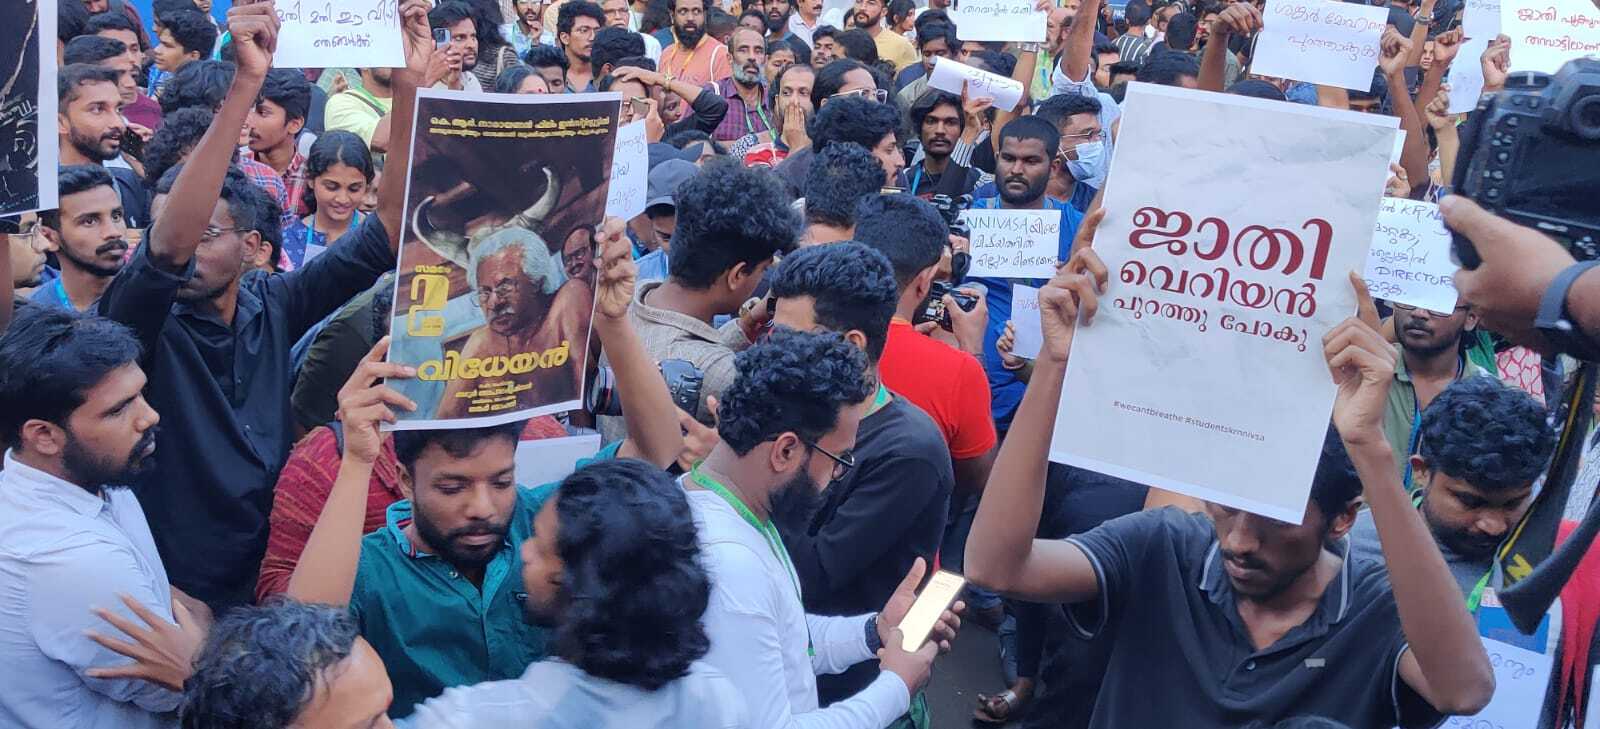 Filmmakers, cinephiles join students at IFFK against Kerala film school caste discrimination